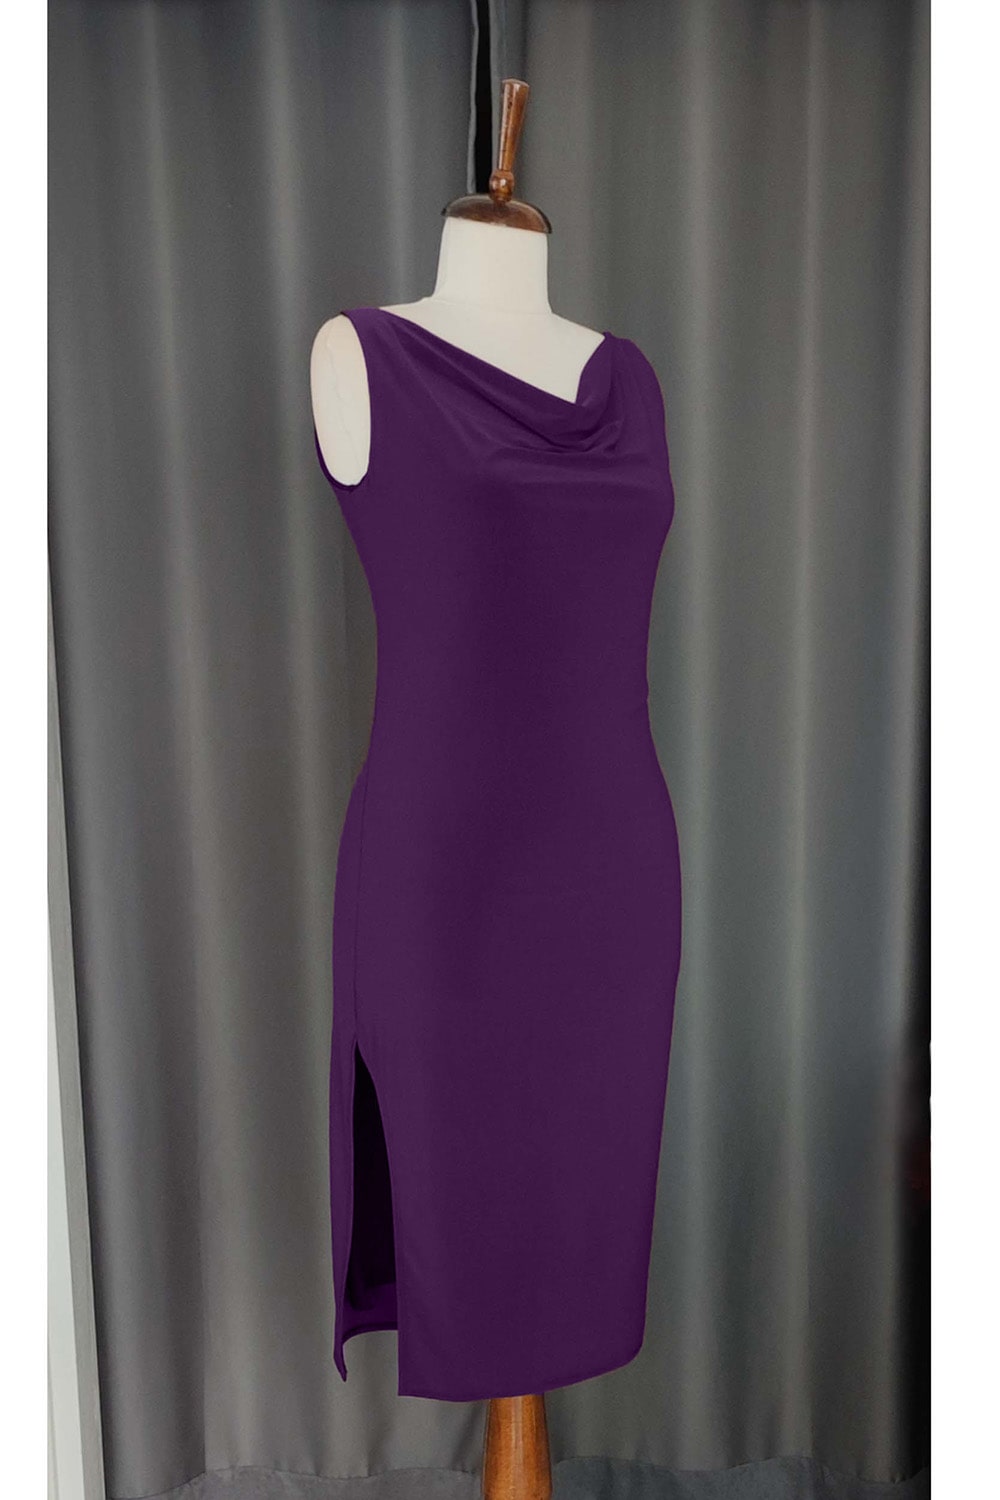 purple-tango-dress